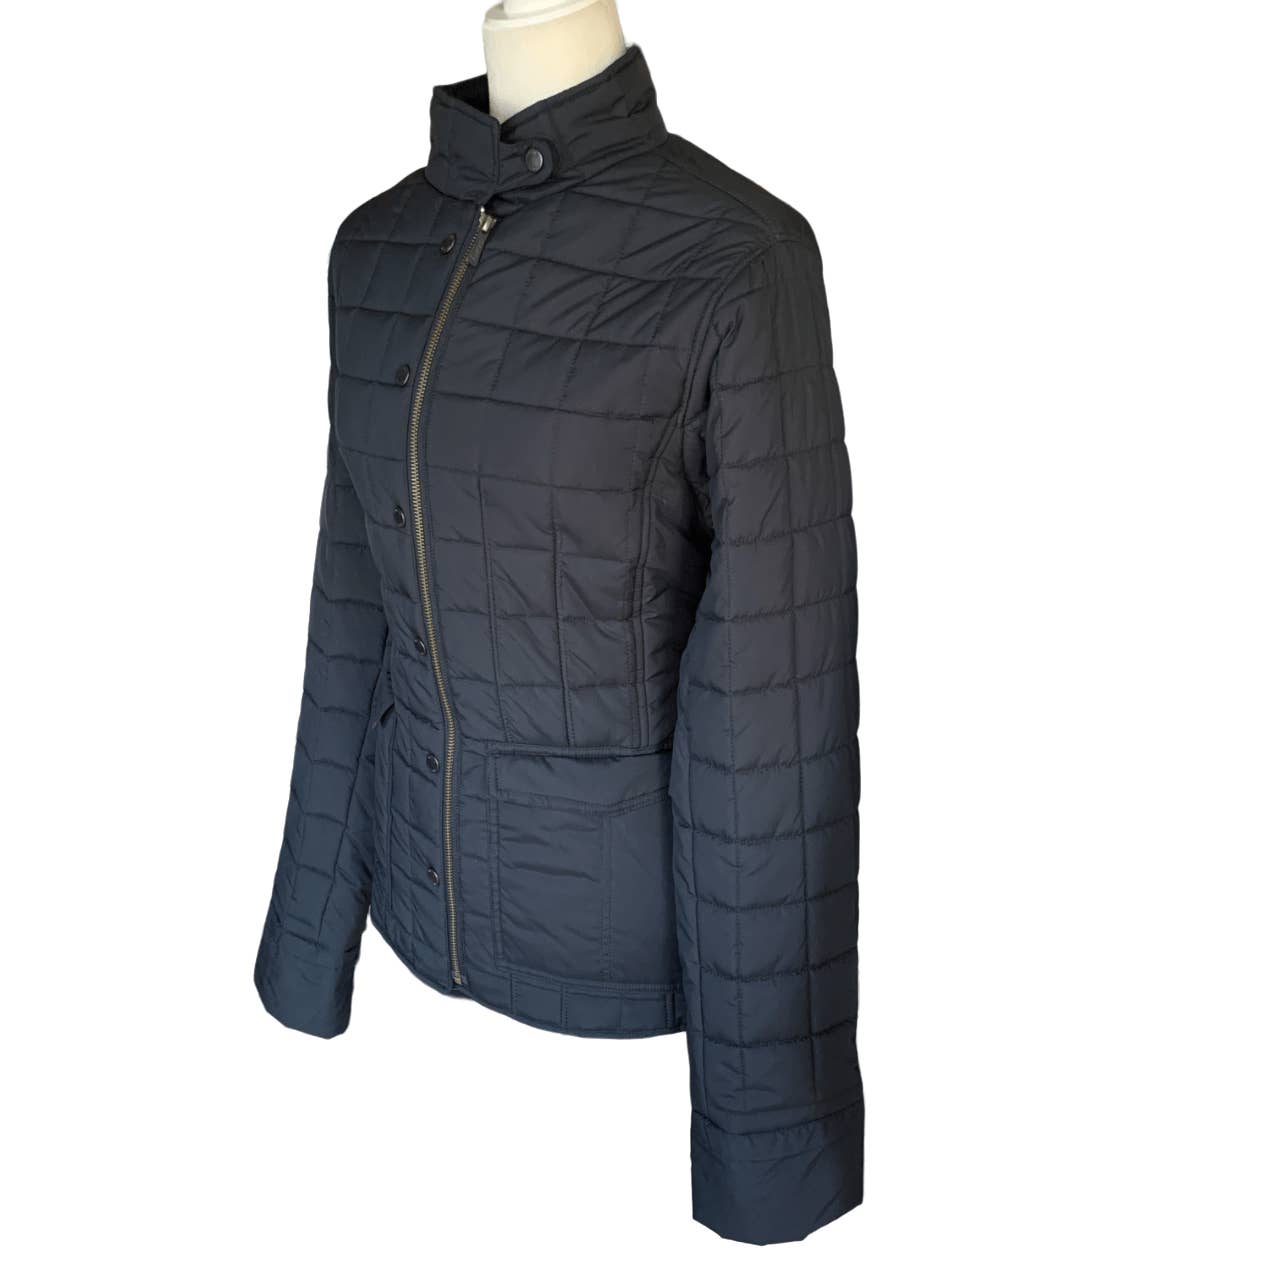 Dubarry Primaloft Quilted Winter Jacket in Black - UK16 (US14)